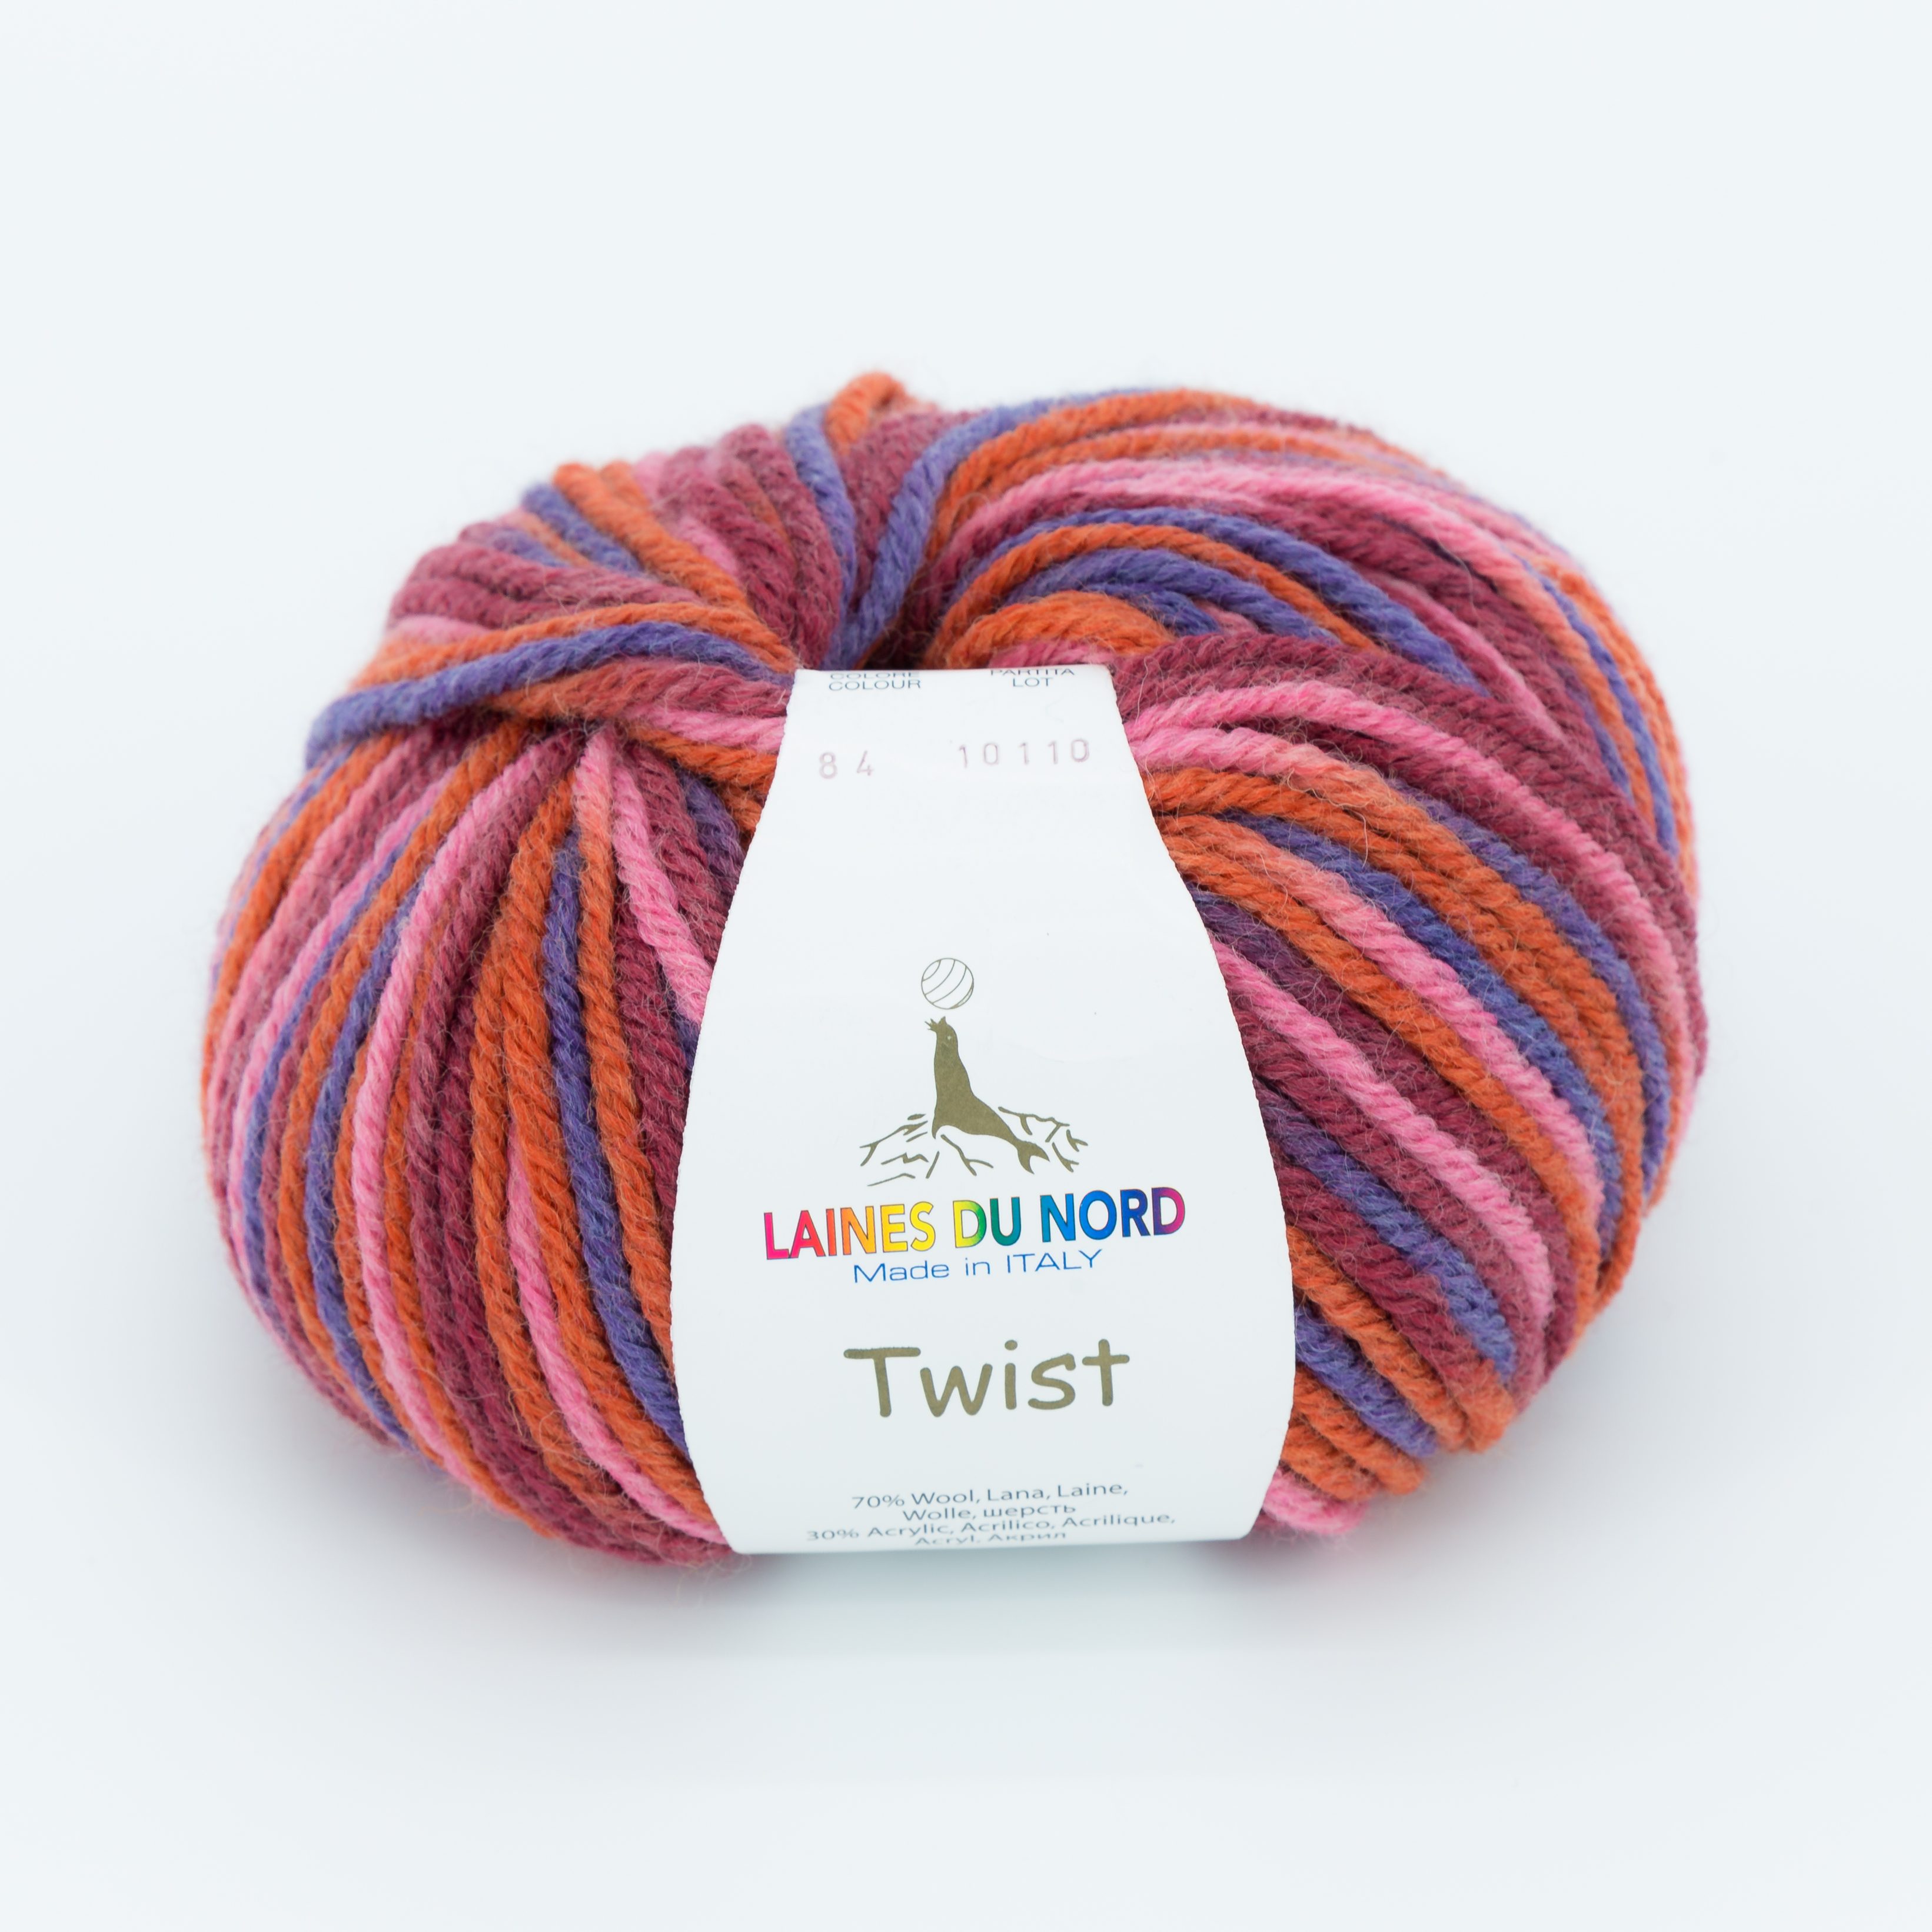 Twist Color Laines du Nord - Calore di Lana www.caloredilana.com